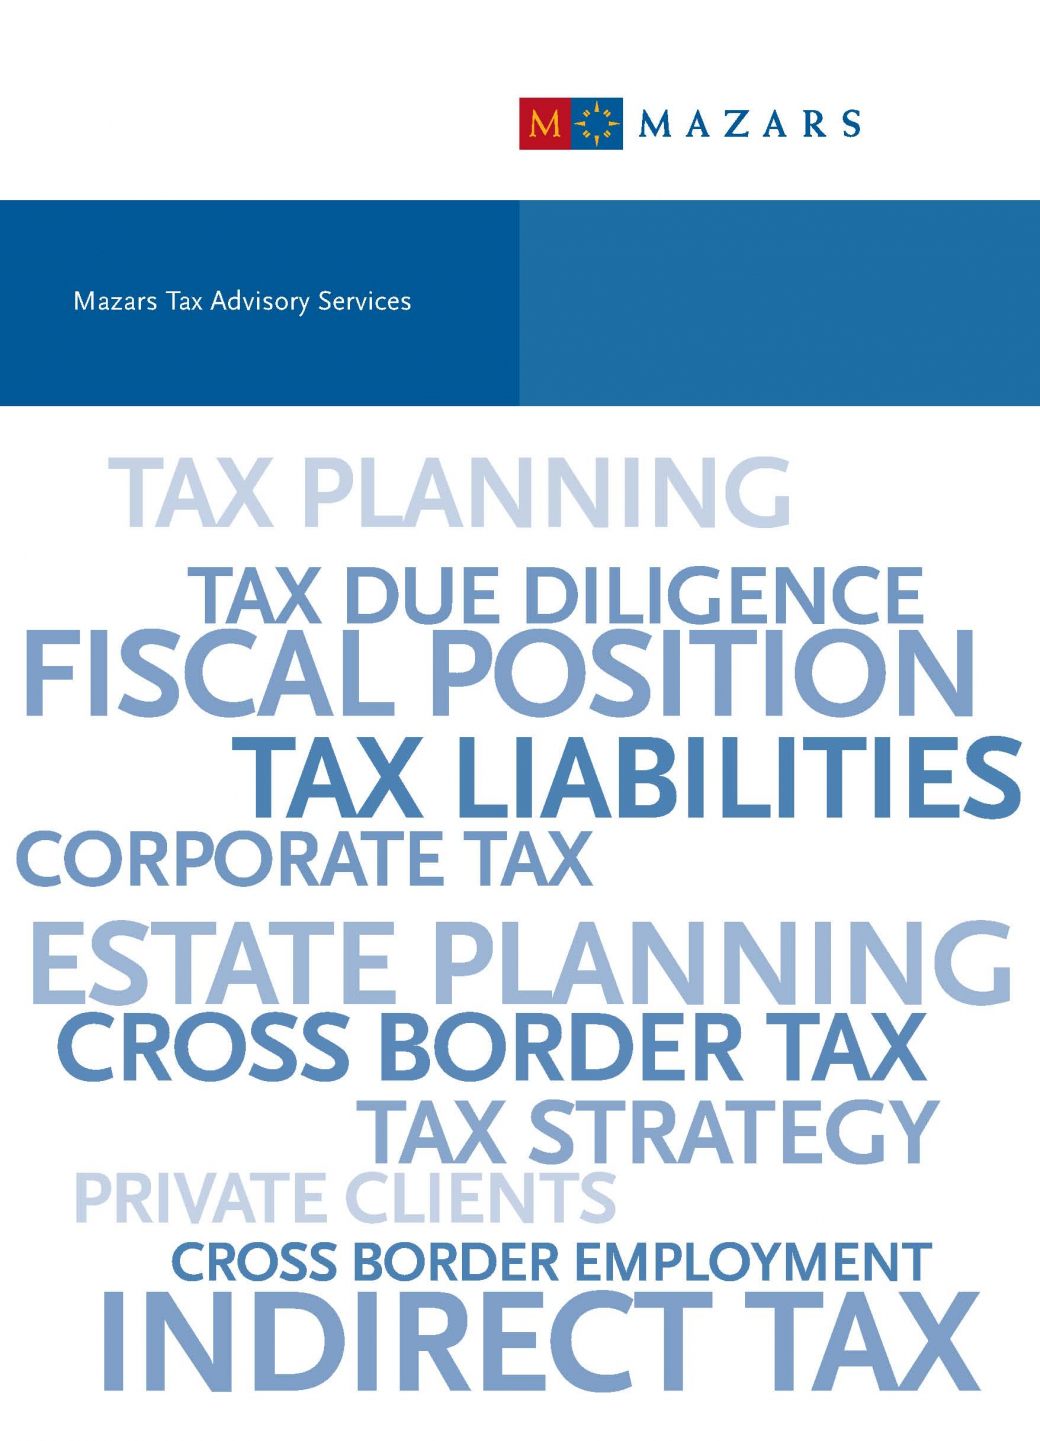 Mazars Tax Advisory Services cover